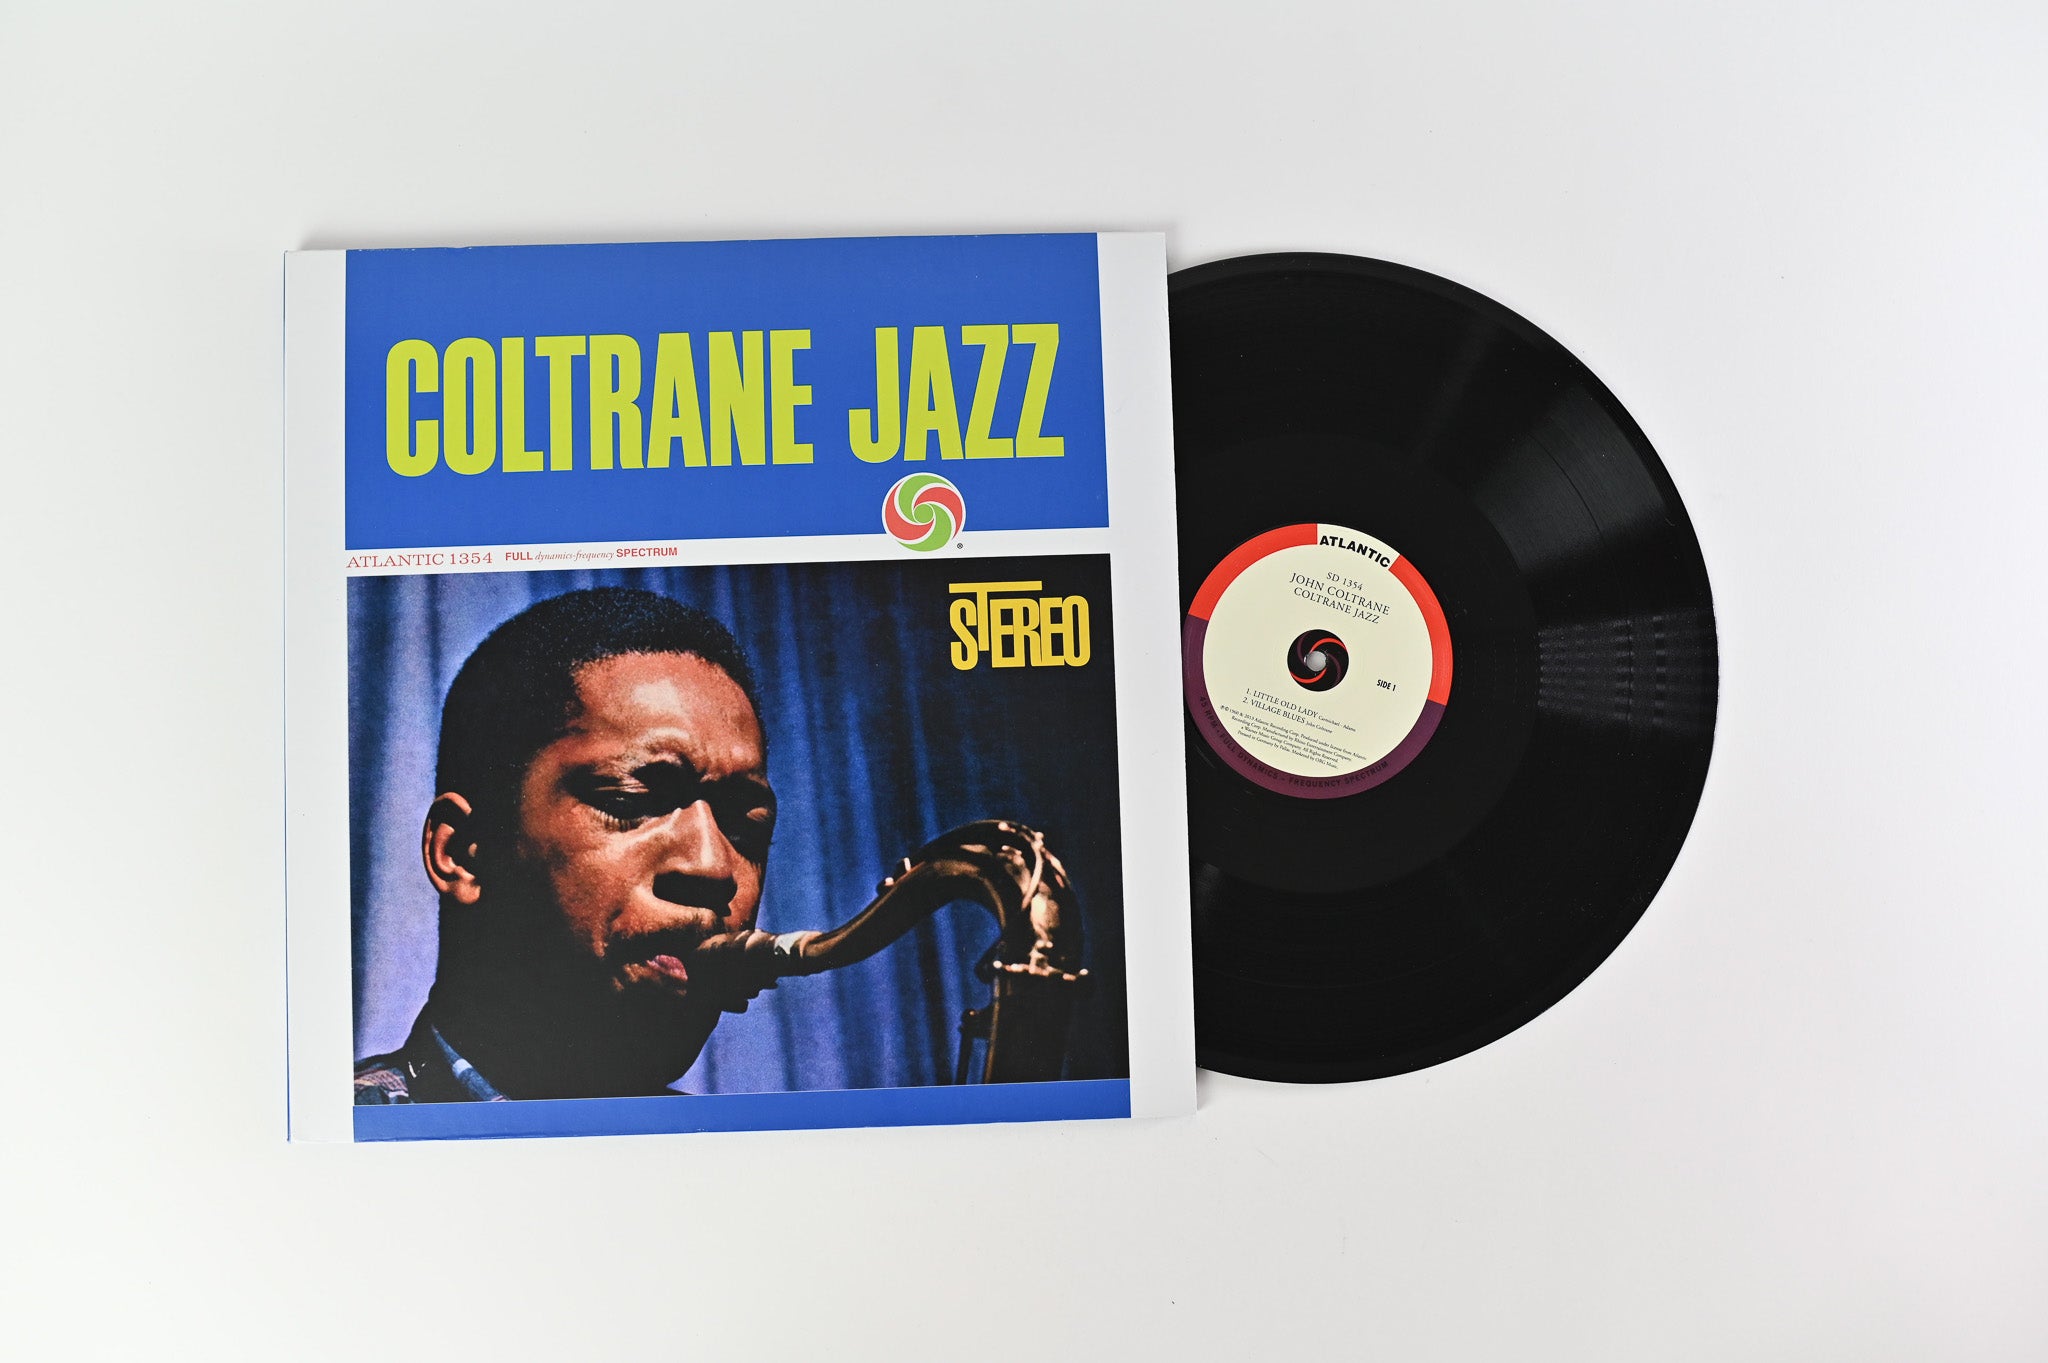 John Coltrane - Coltrane Jazz on ORG Music